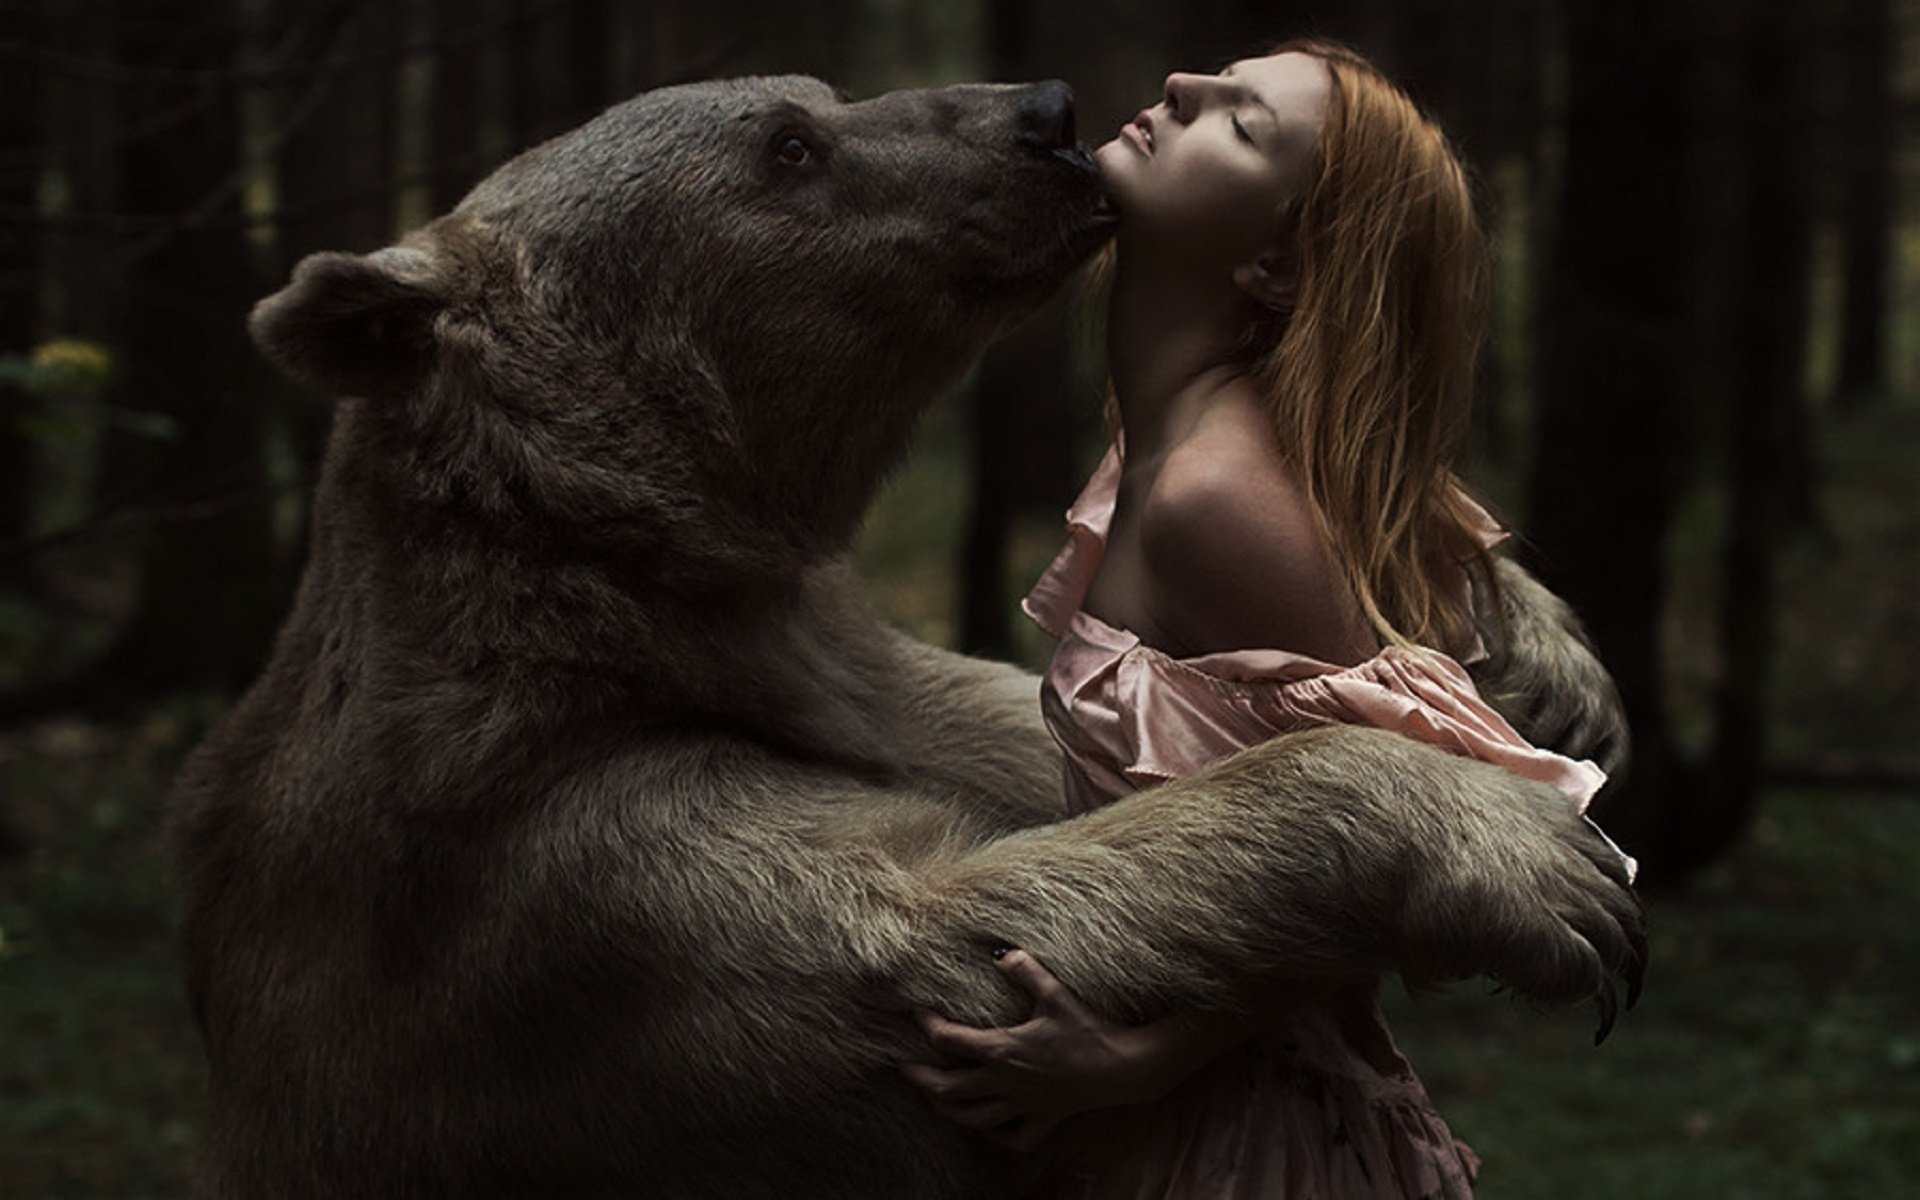 Голая девушка на шкуре медведя